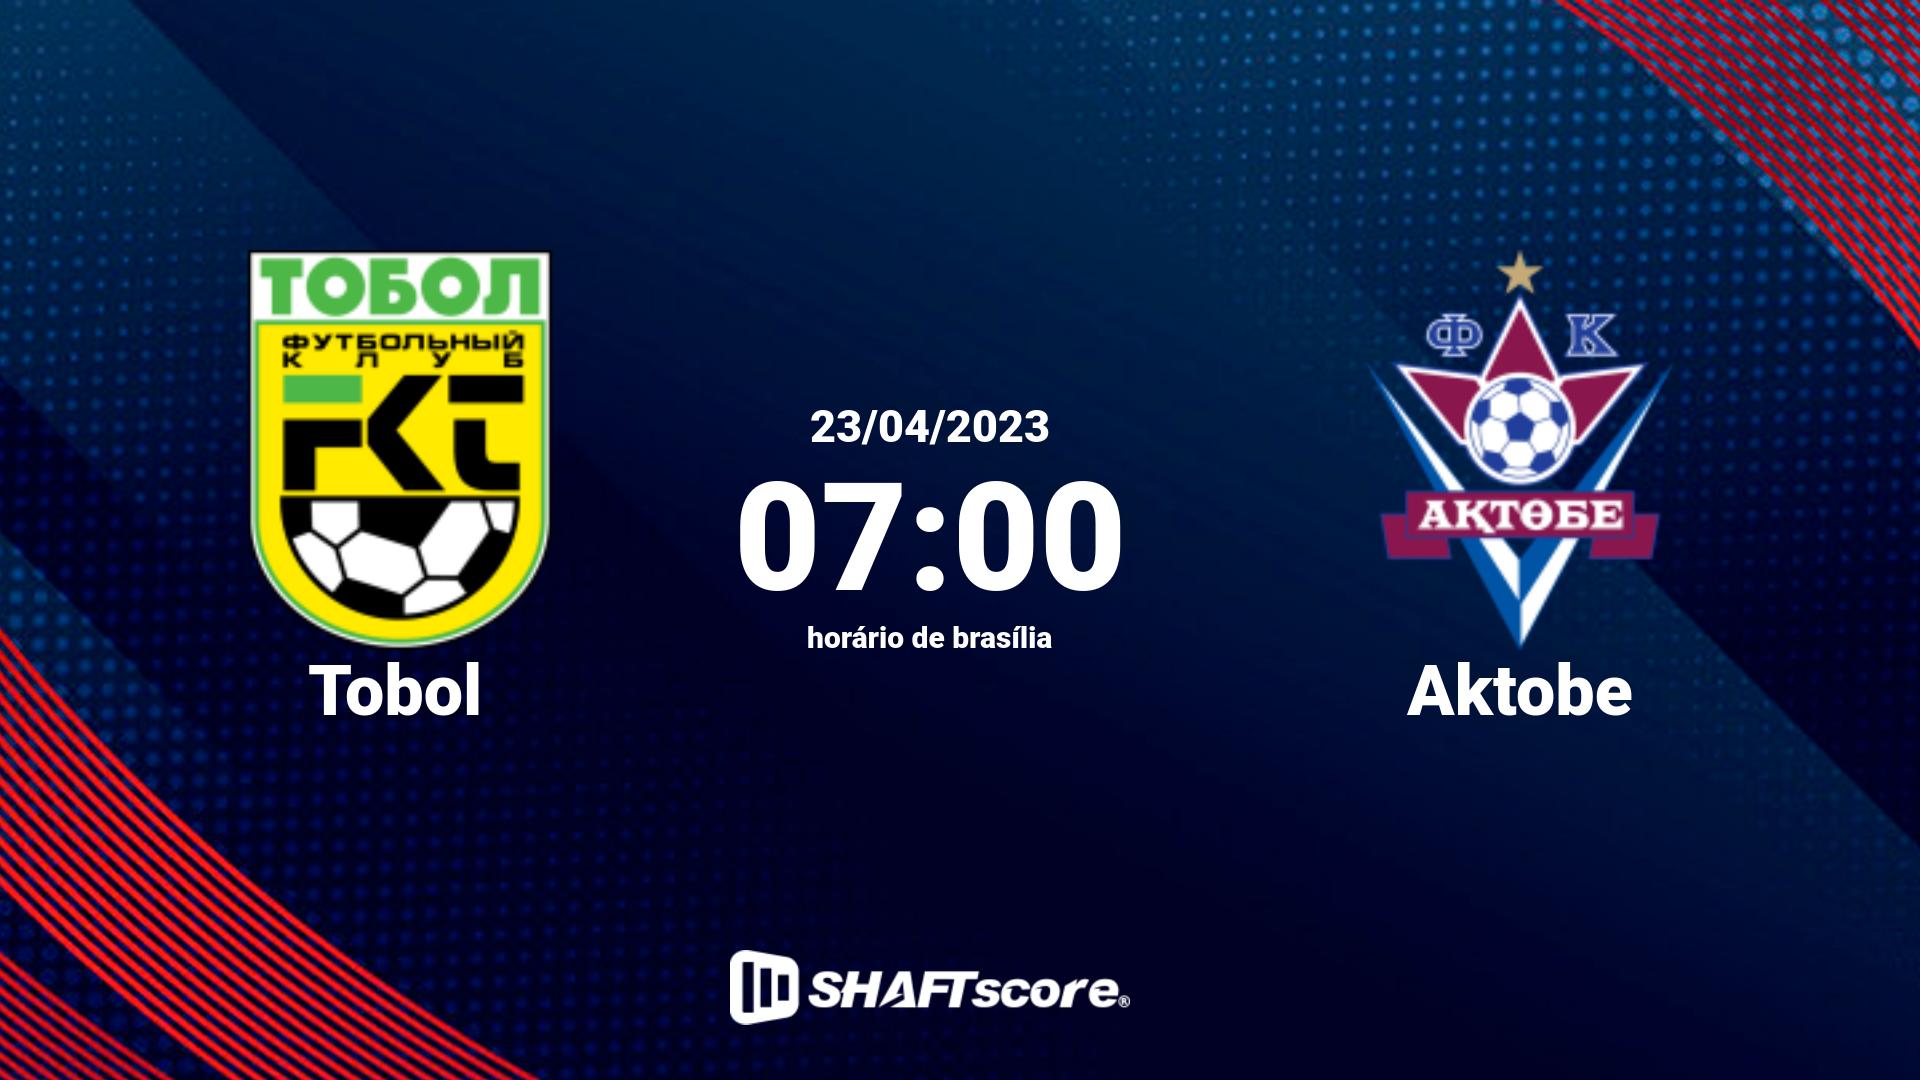 Estatísticas do jogo Tobol vs Aktobe 23.04 07:00